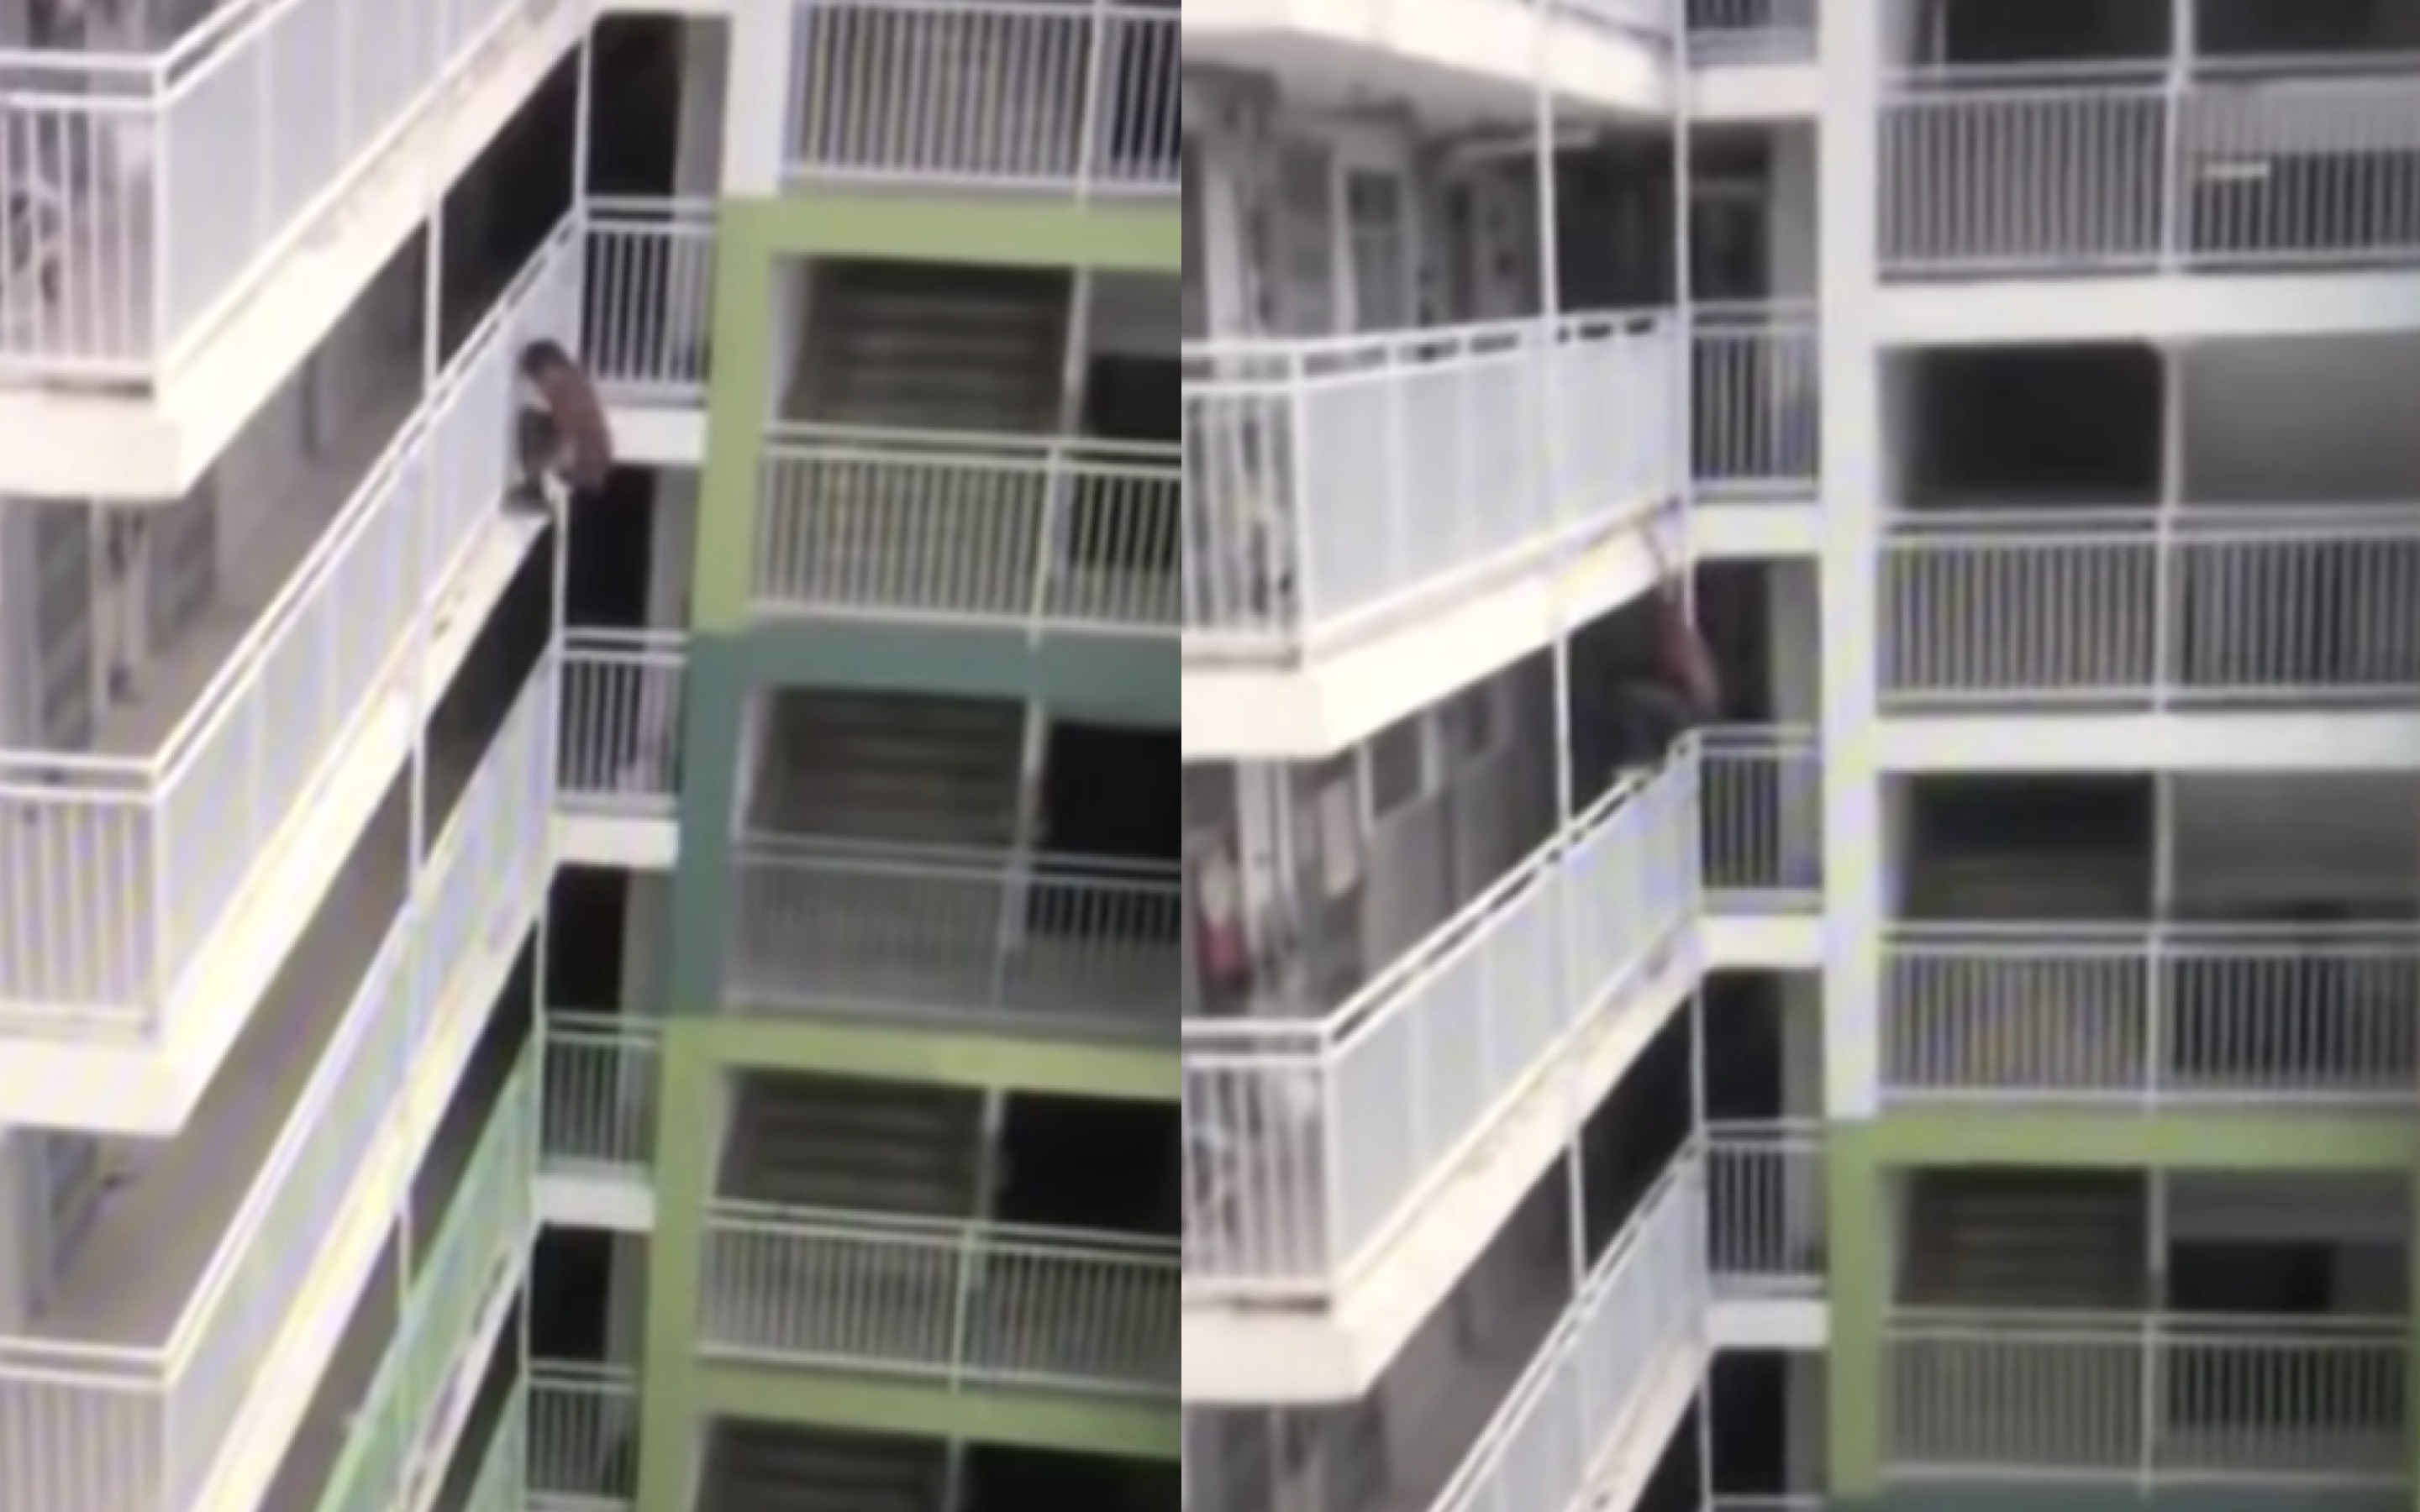 A parkour enthusiast climbing down the balconies of a housing estate in Shek Kip Mei. Screengrab via YouTube.